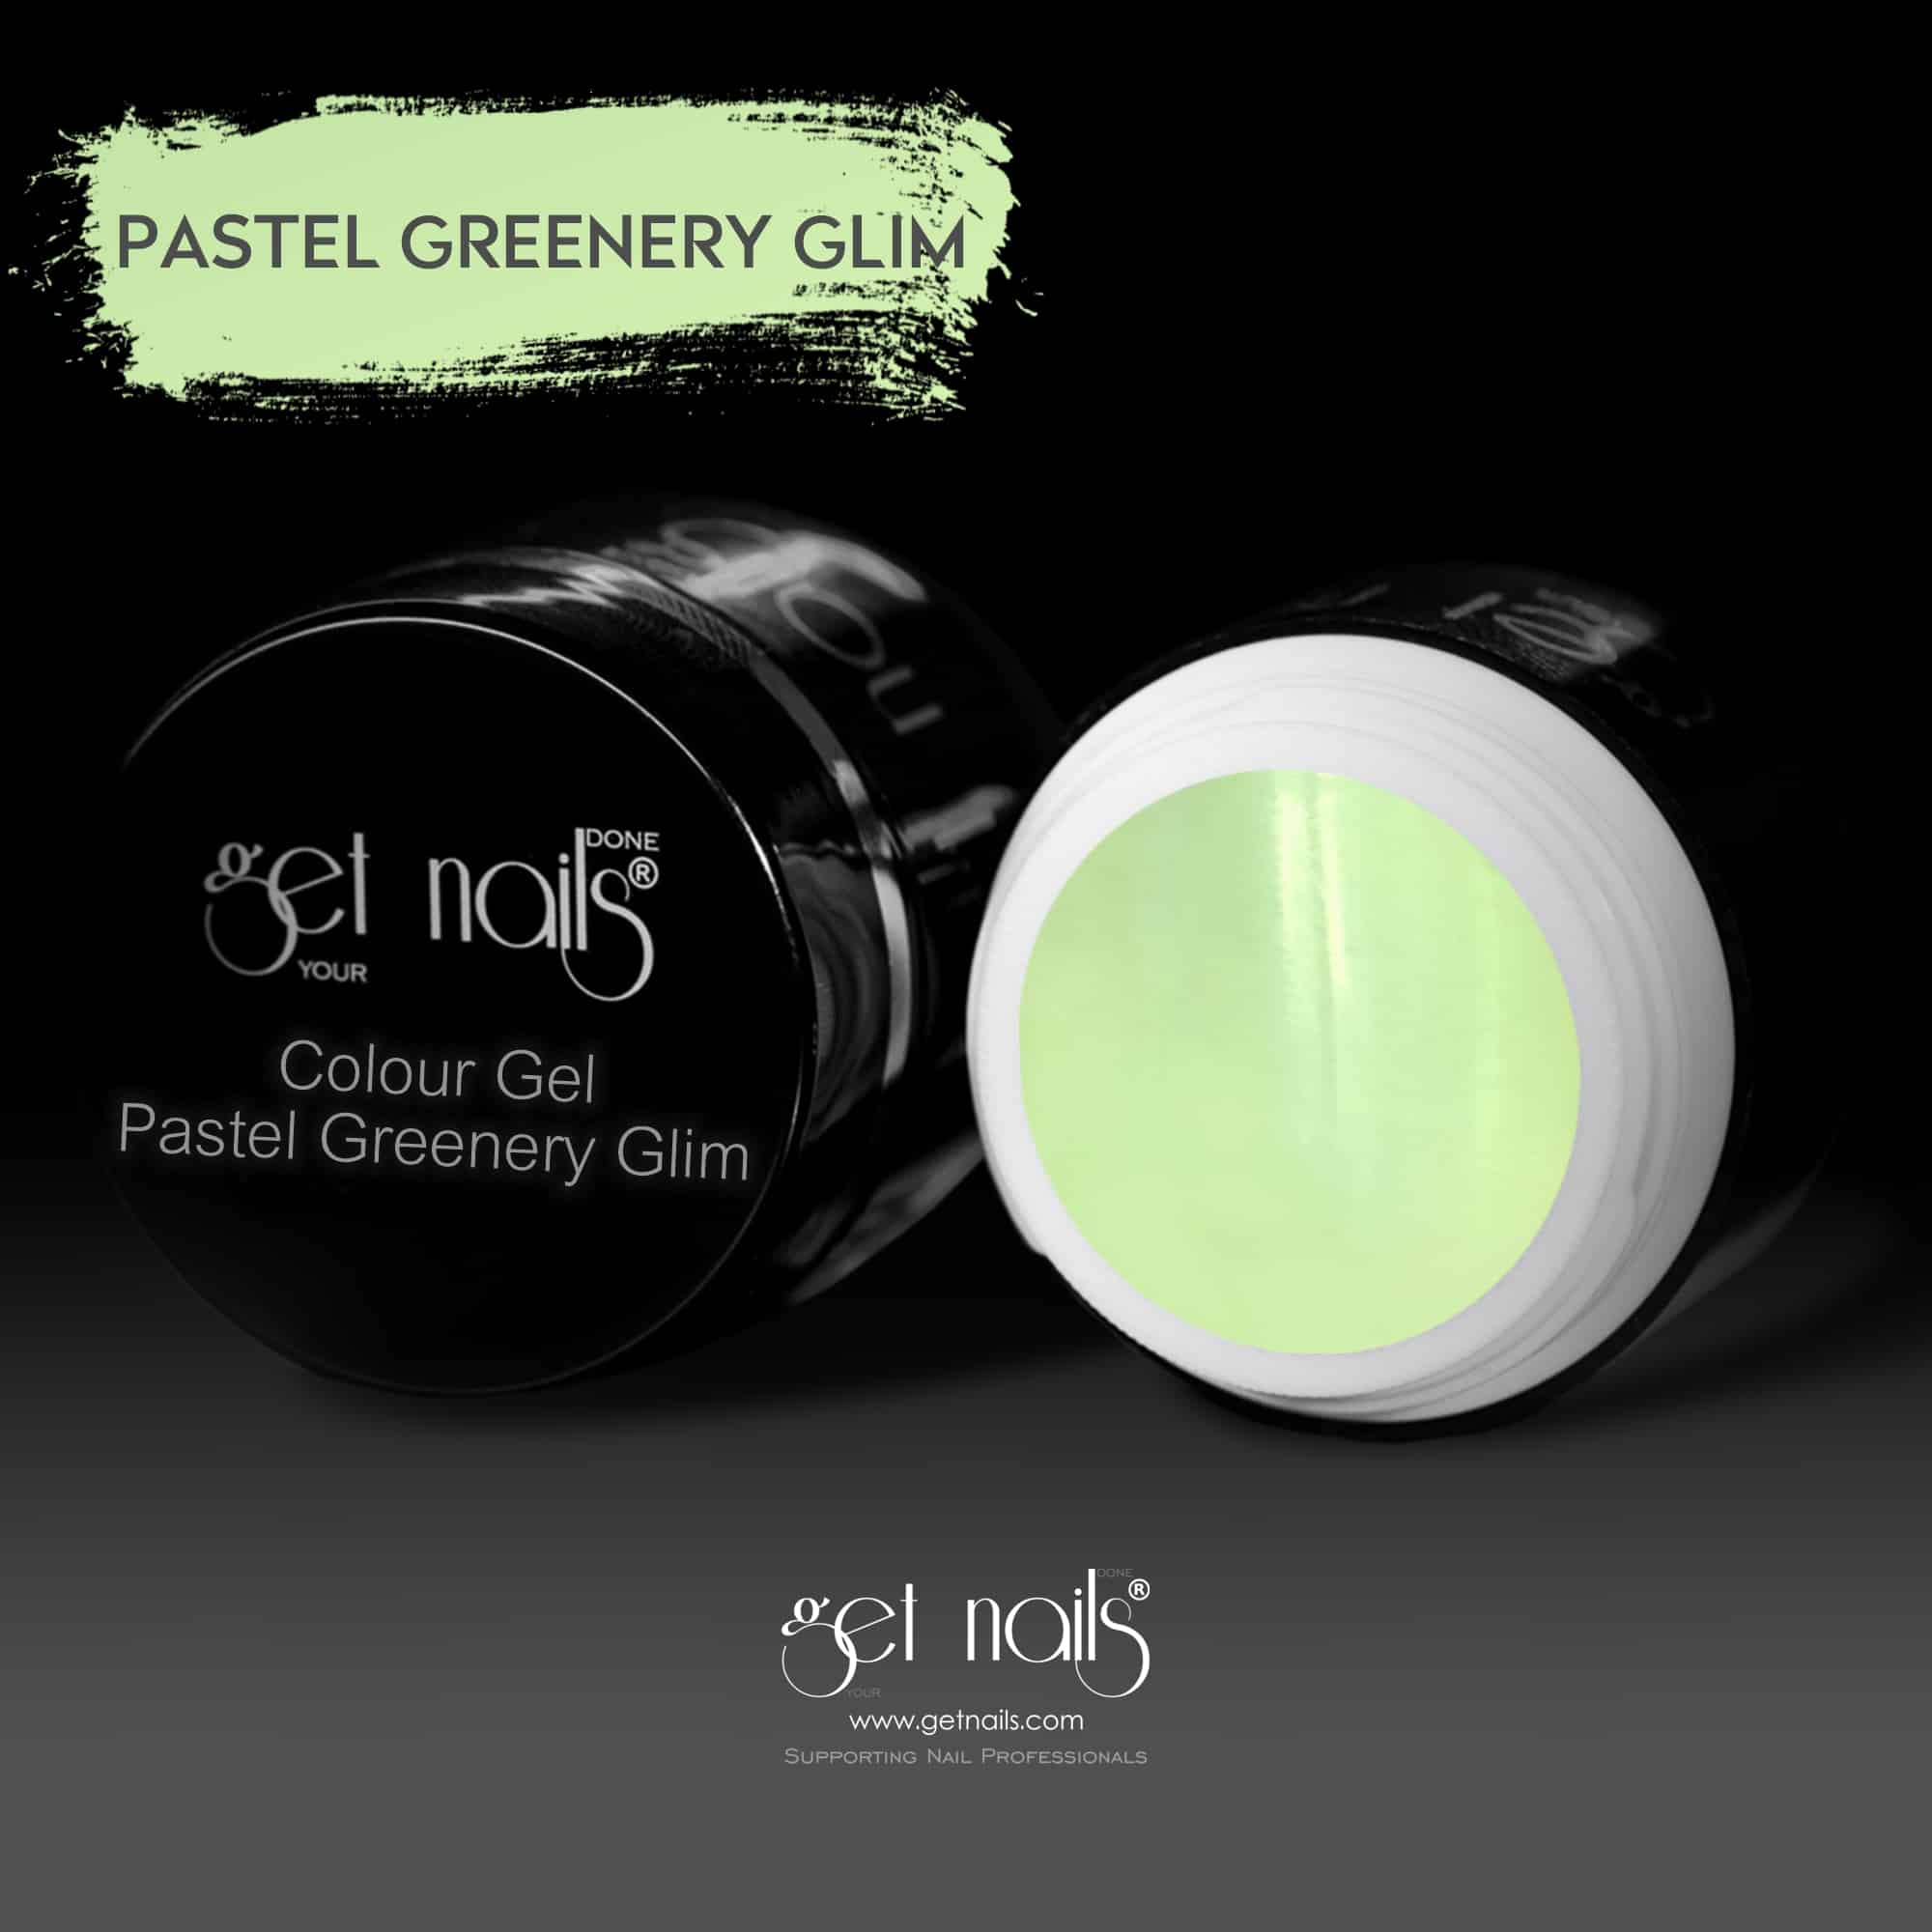 Get Nails Austria - Цветной гель Pastel Greenery Glim 5g